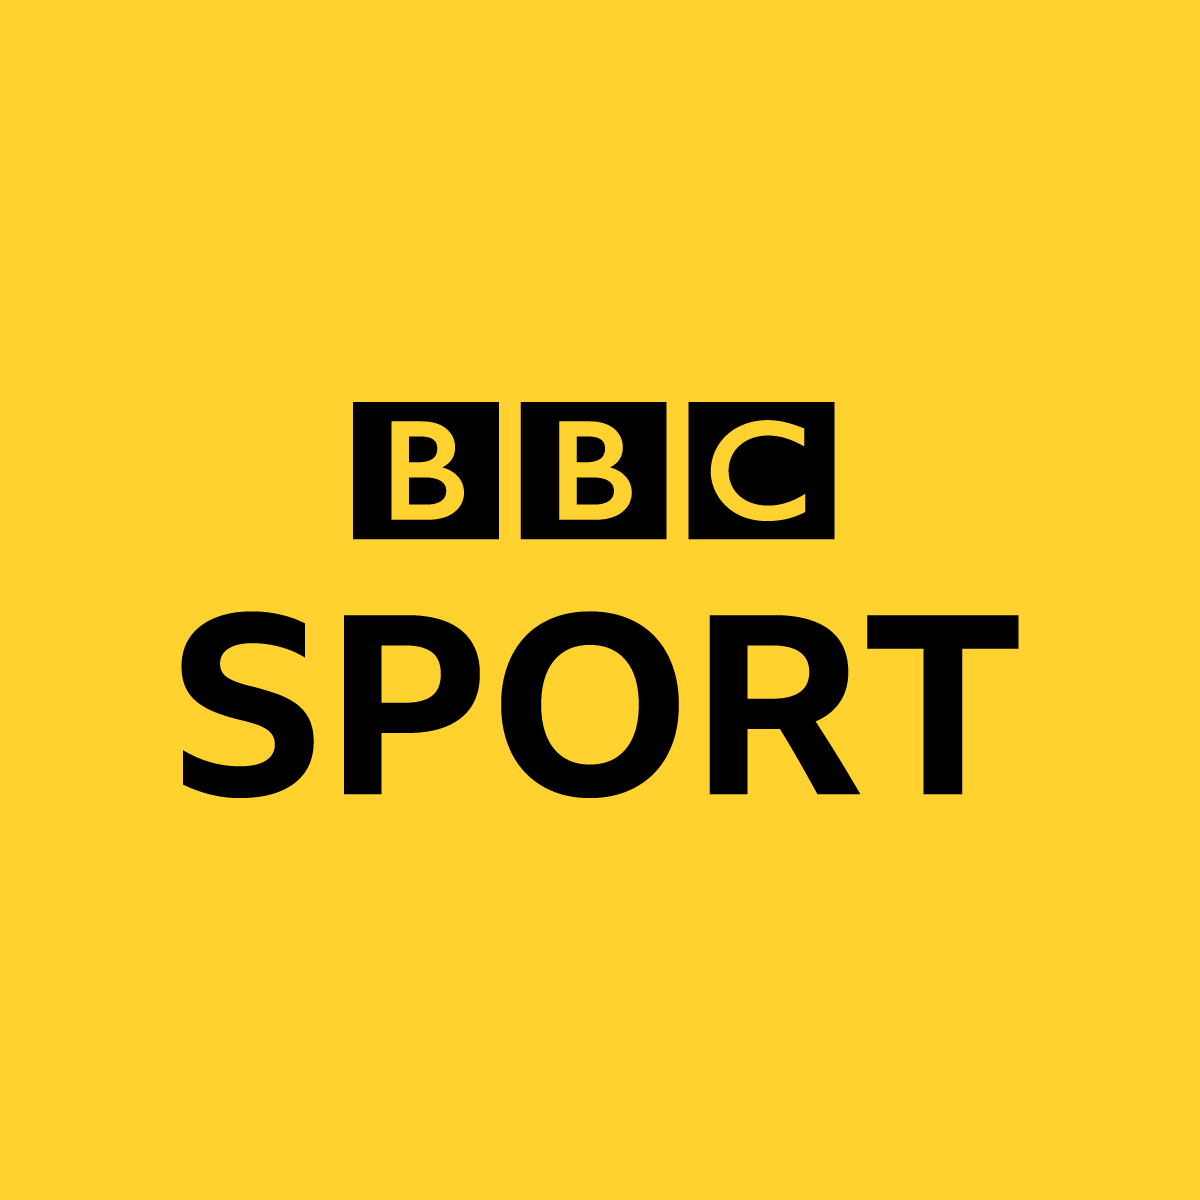 bbc sport football results